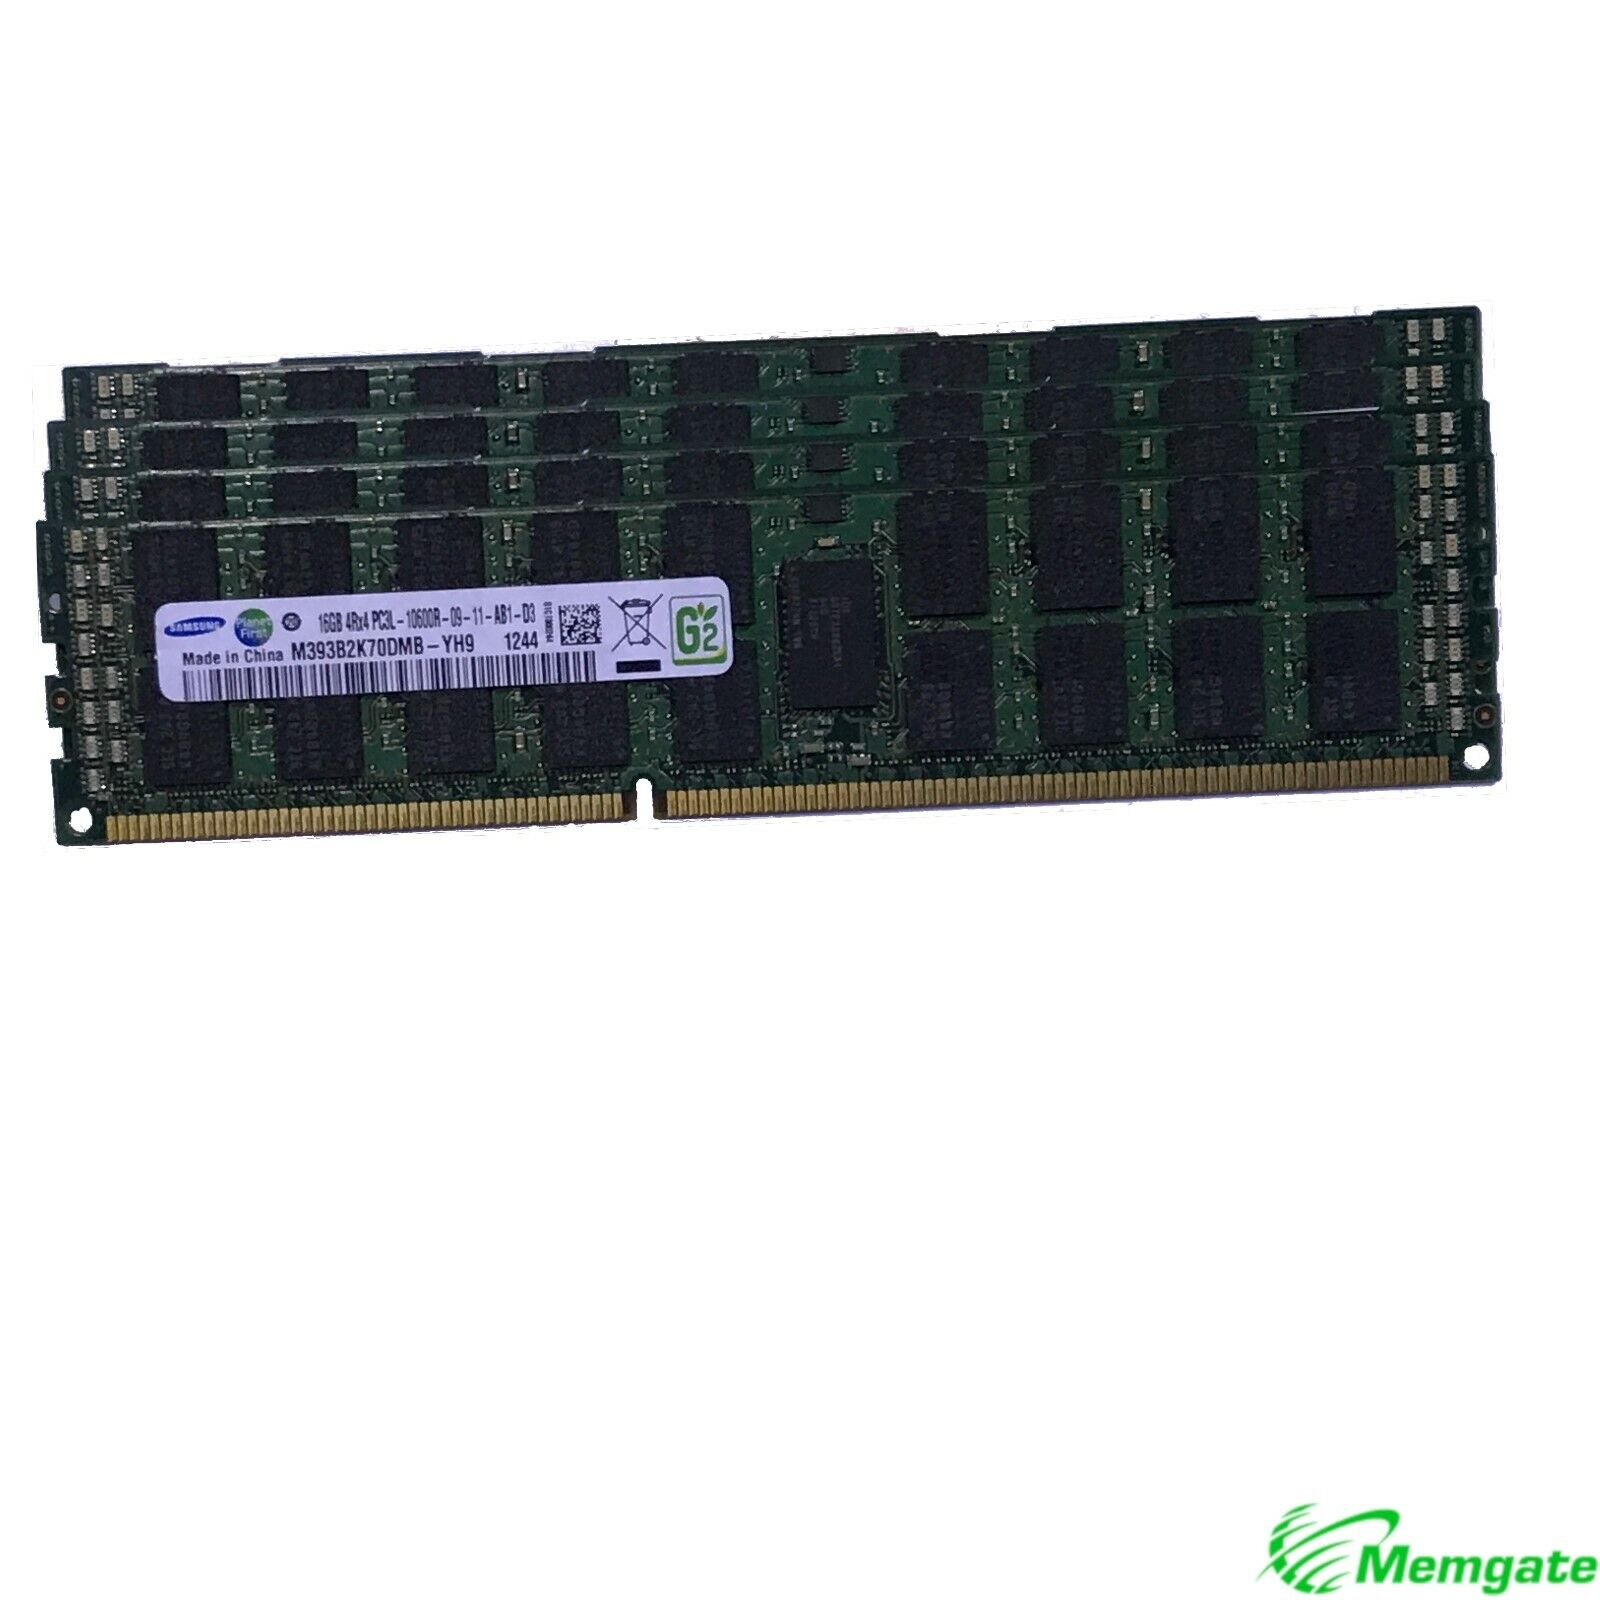 512GB (32 x 16GB) PC3-10600R DDR3 4Rx4 ECC Reg RDIMM Memory RAM for Dell R510